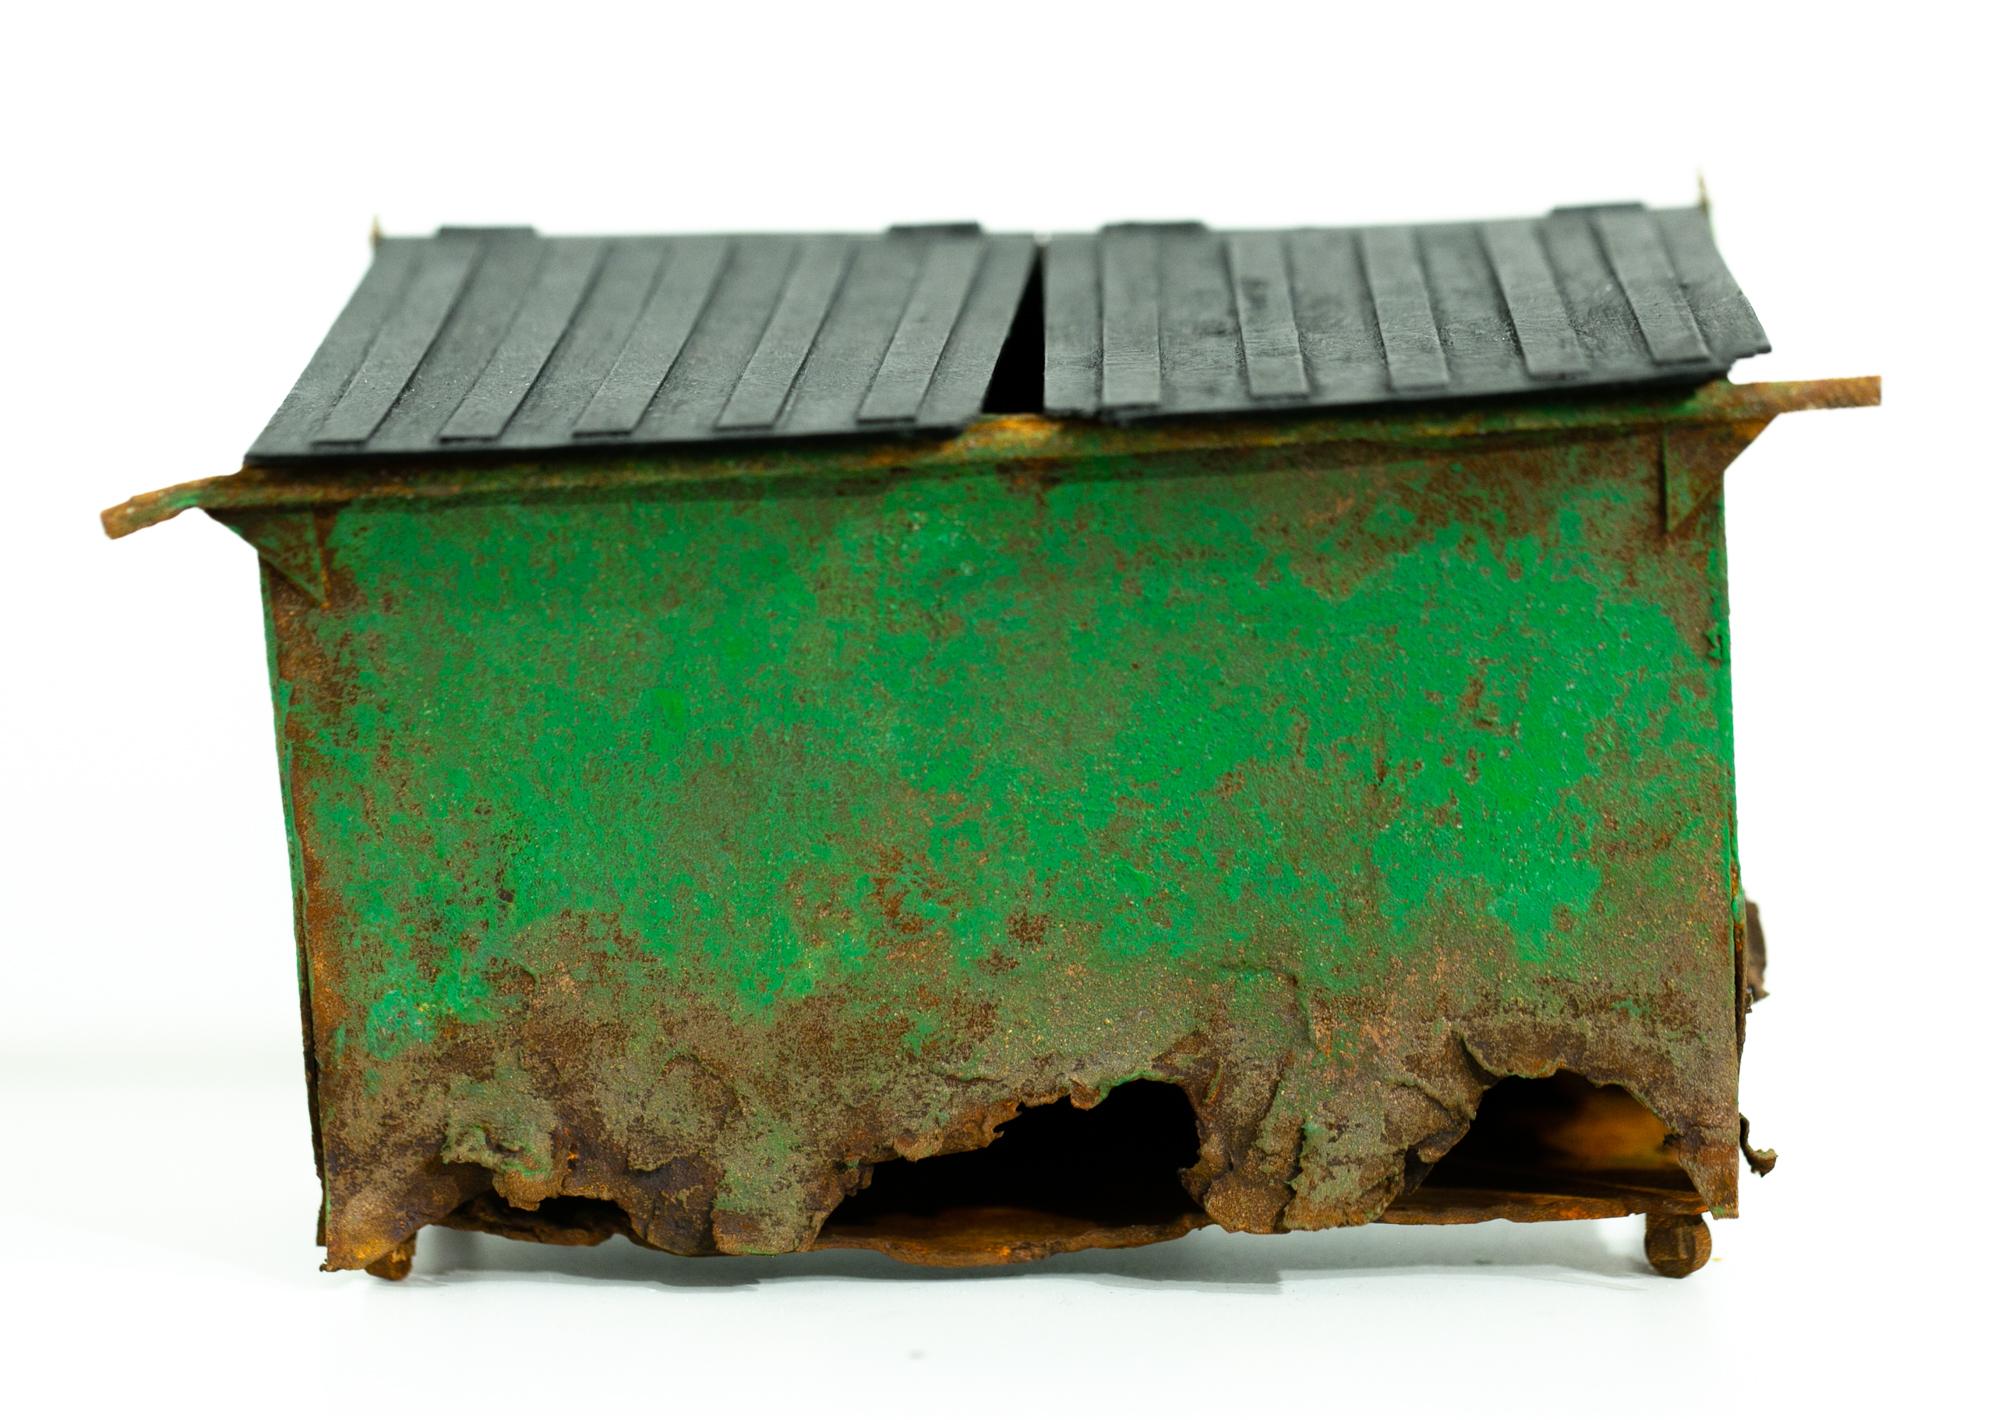 Drew Leshko Still-Life Sculpture - "Green Dumpster", Miniature paper sculpture